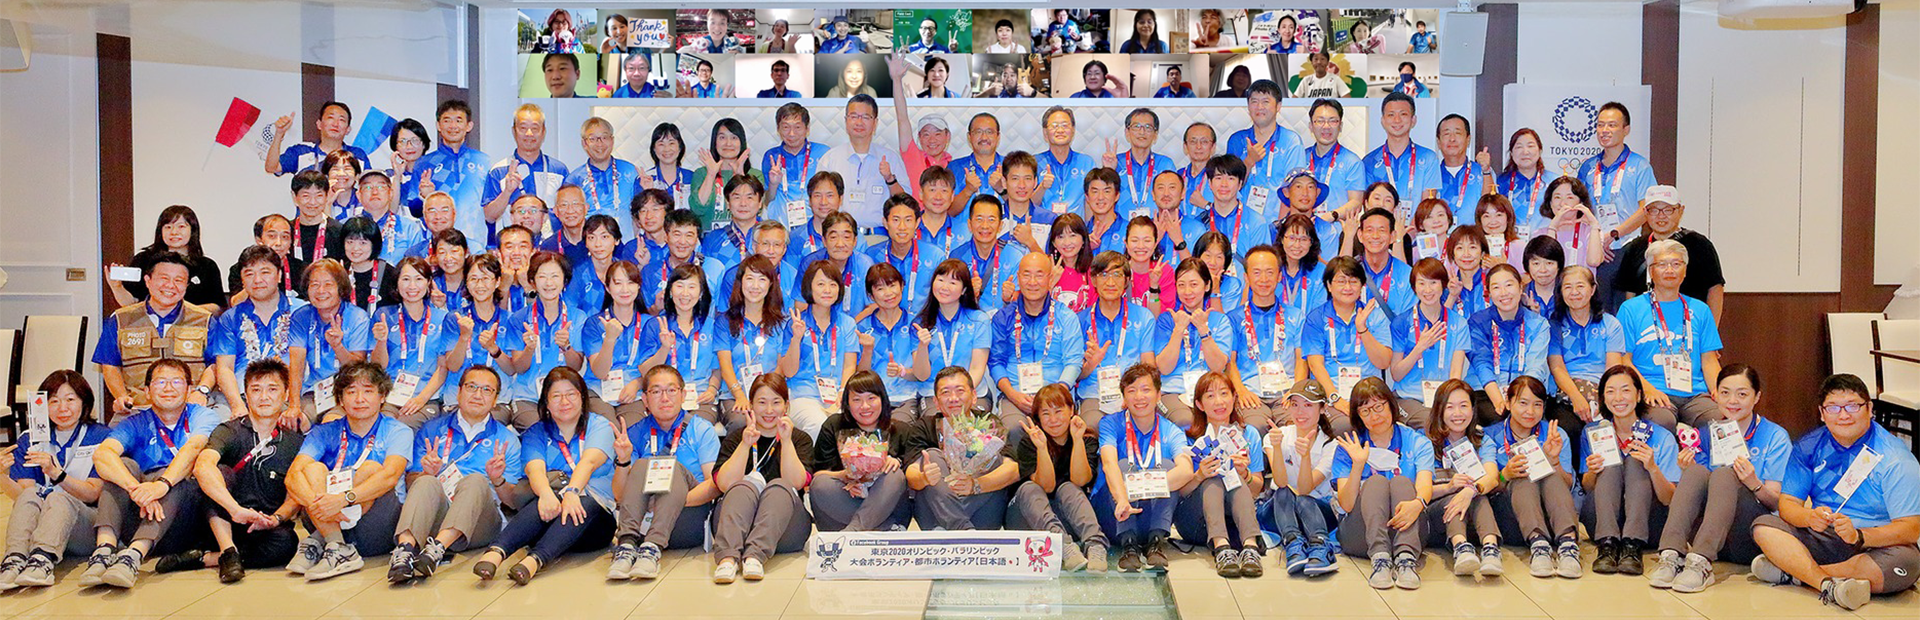 Tokyo 2020 Volunteers Facebook Group Farewell Party